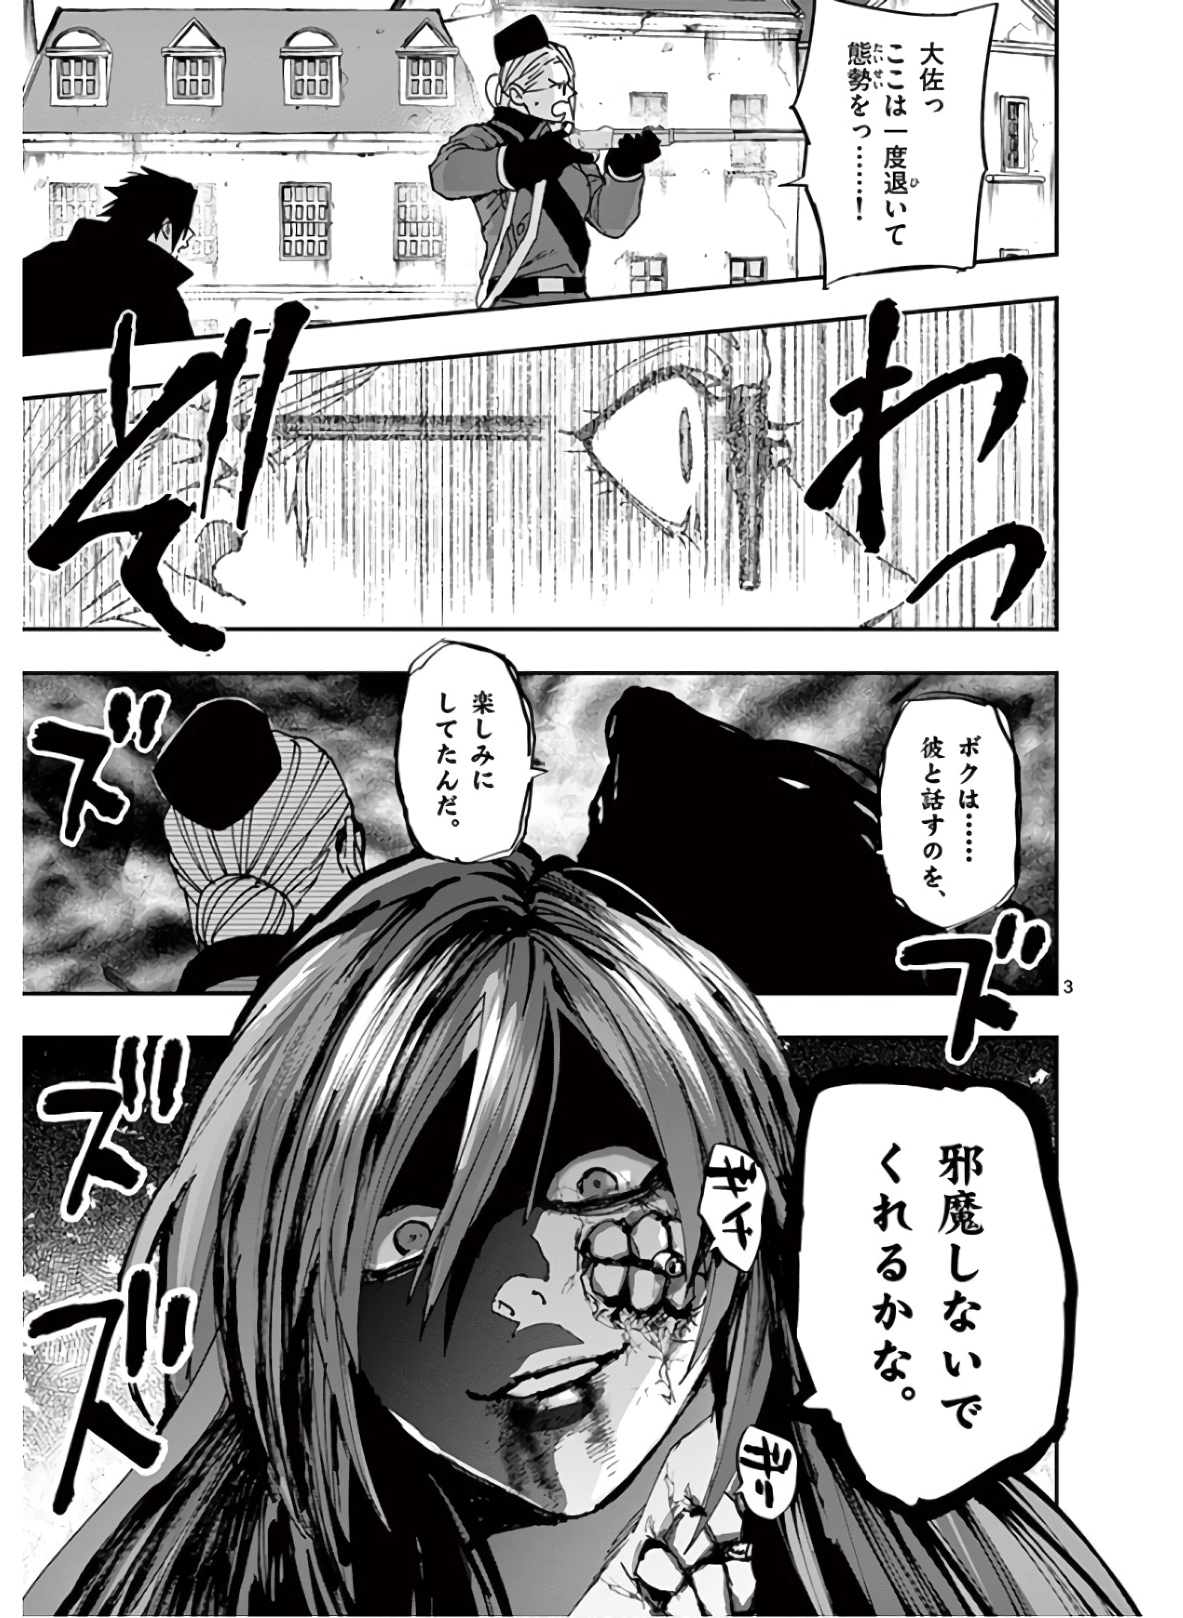 Ginrou Bloodborne - Chapter 109 - Page 3